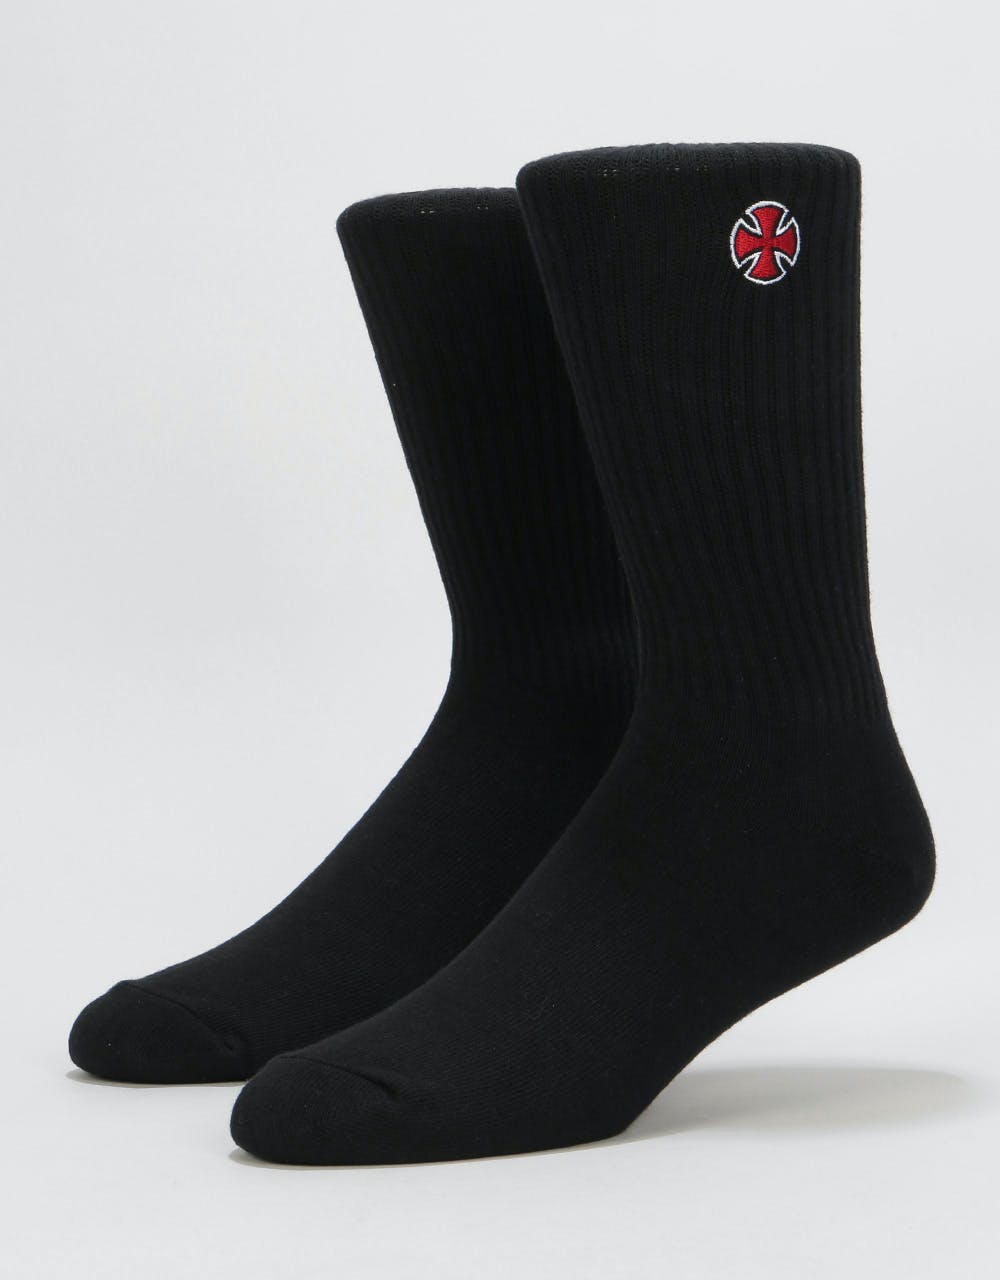 Independent Cross Socks - Black